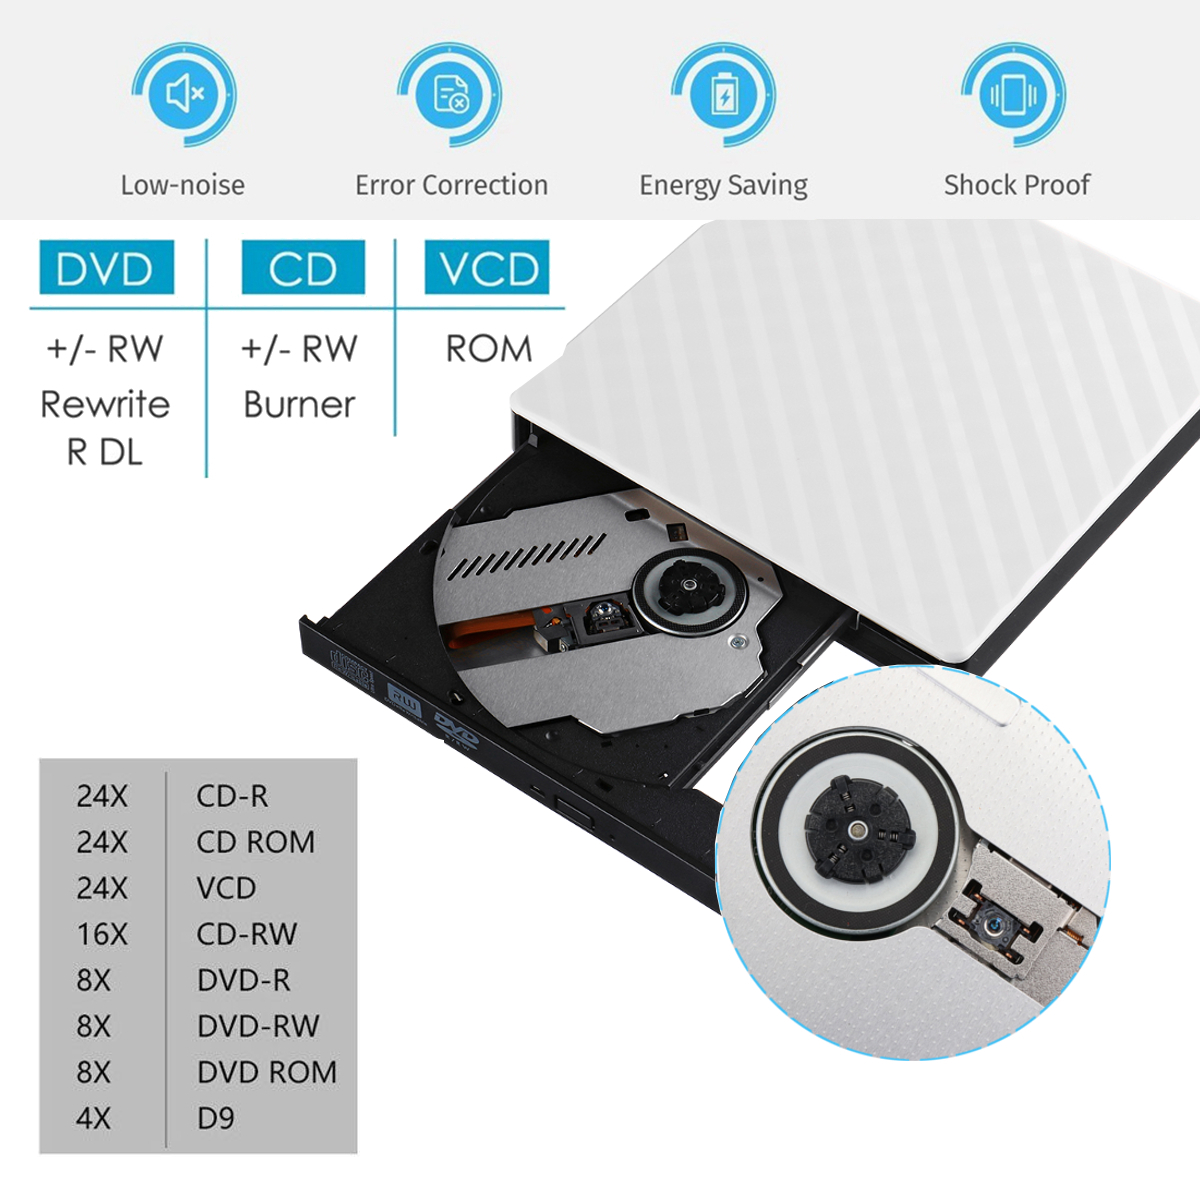 External-USB-30-DVD-RW-CD-Writer-Slim-Carbon-Grain-Drive-Burner-Reader-Player-For-PC-Laptop-Optical--1536013-3